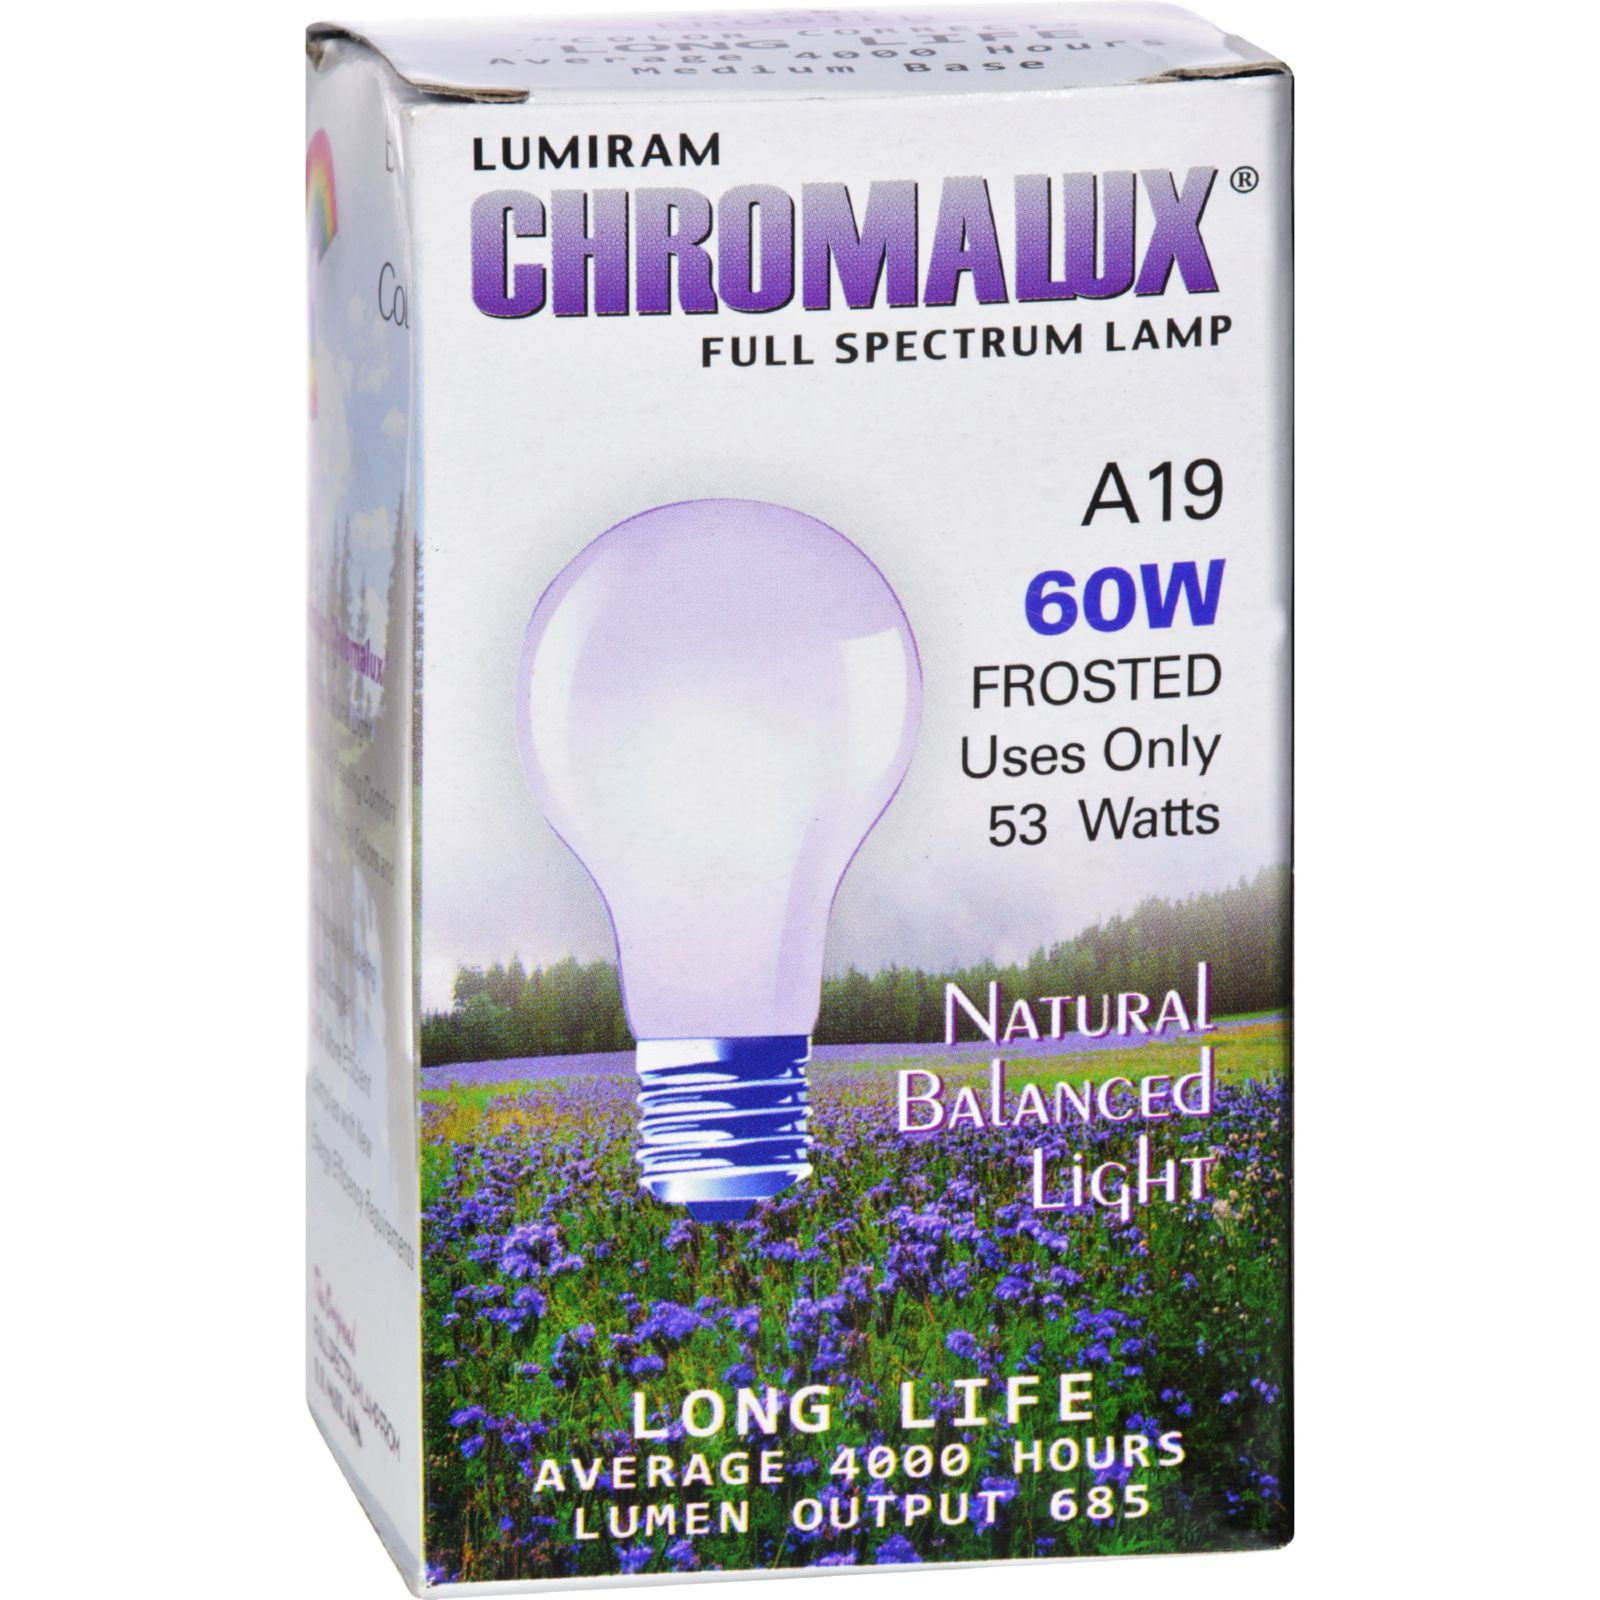 Chromalux Light Bulb Frosted-60W - 1 - Walmart.com